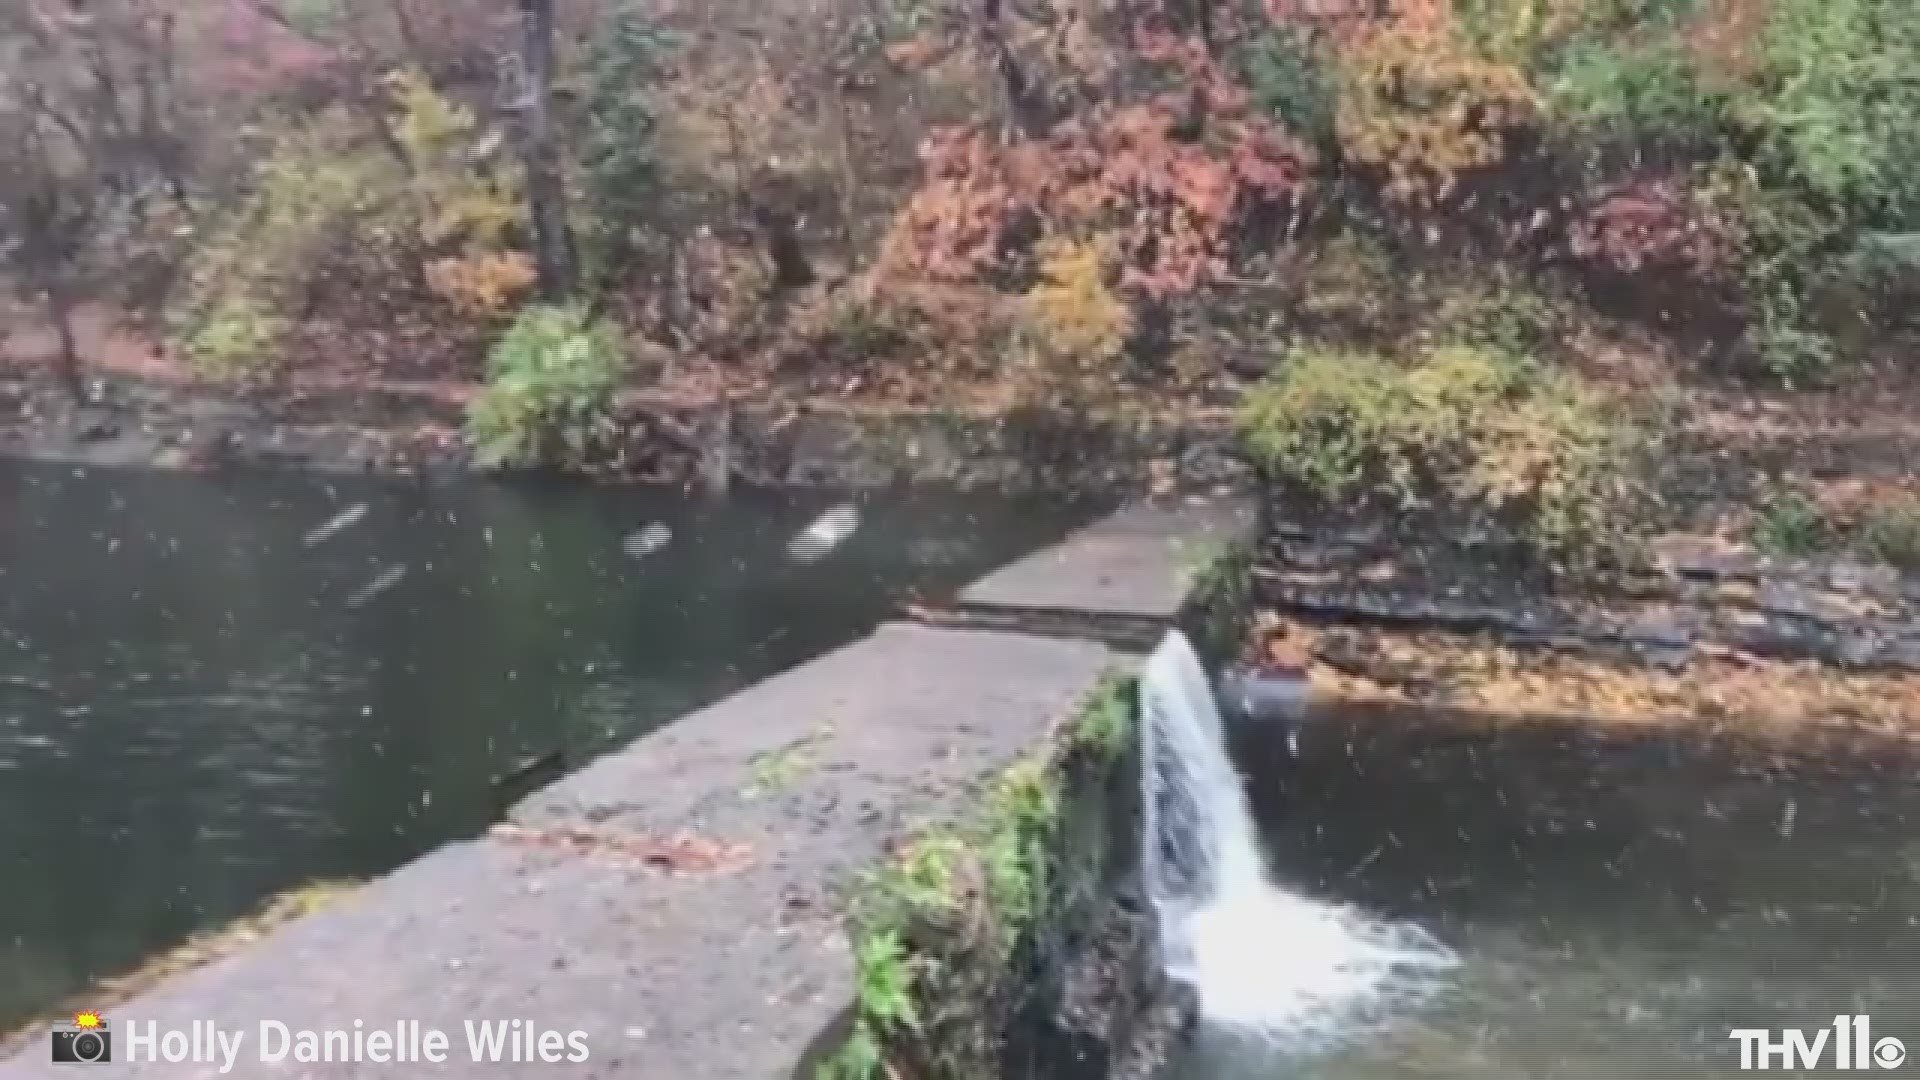 siloam springs waterfall